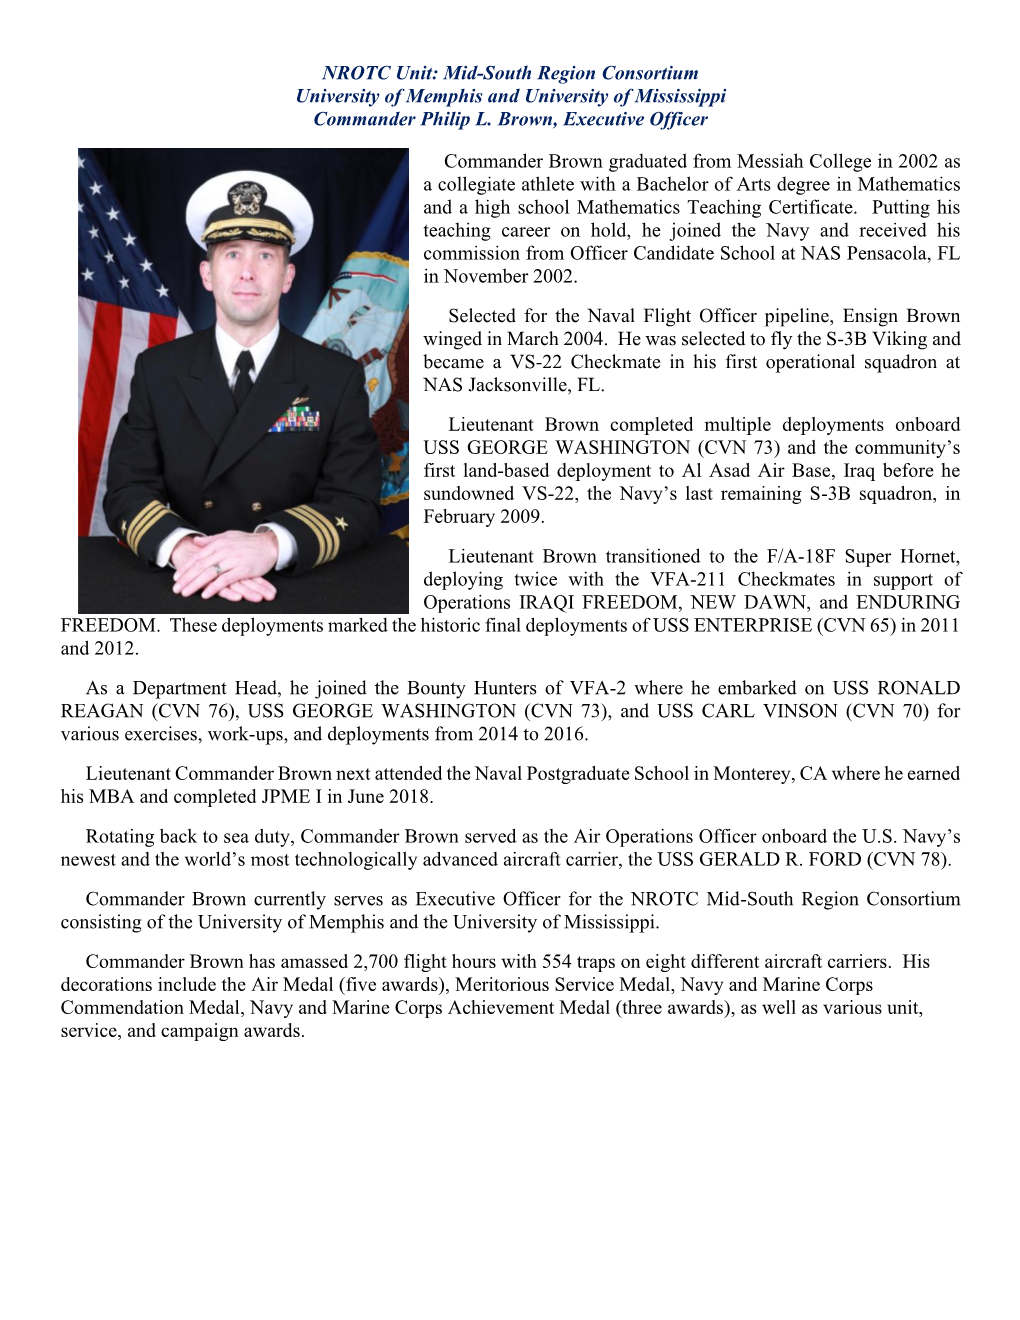 NROTC Unit: Mid-South Region Consortium University of Memphis and University of Mississippi Commander Philip L